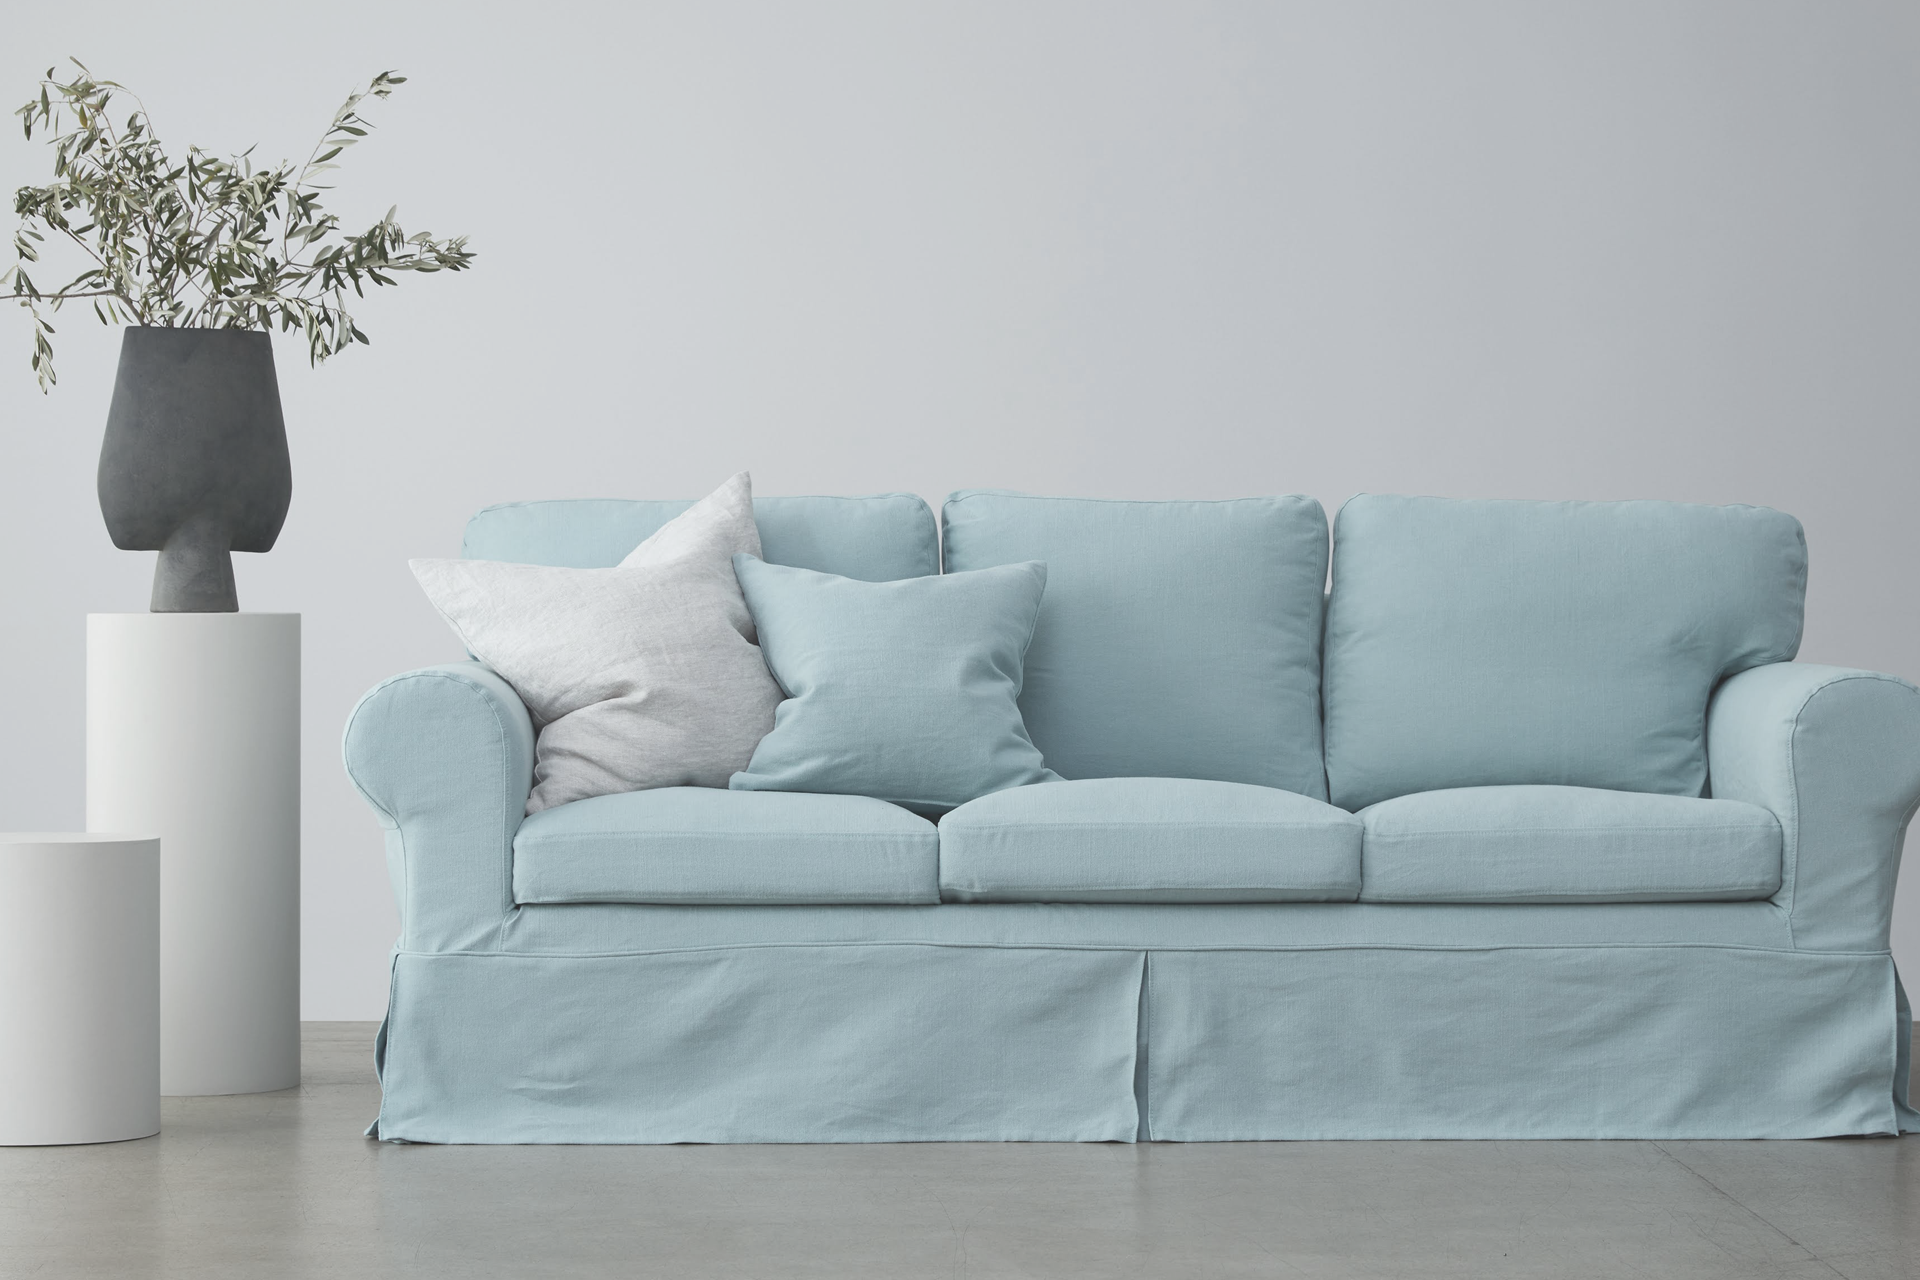 IKEA Ektorp sofa review by Bemz | Bemz